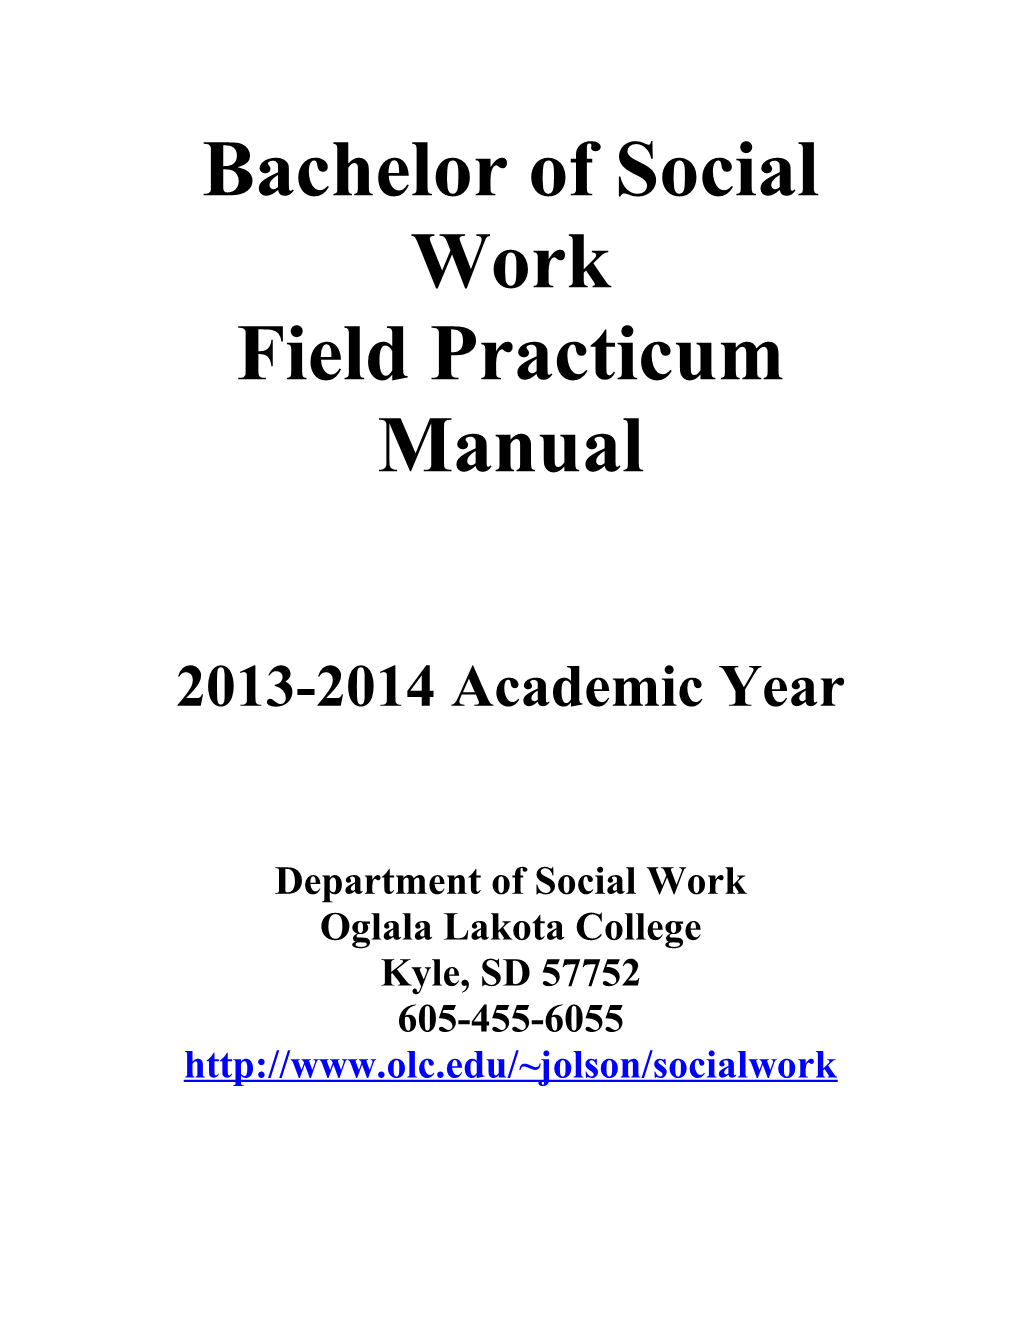 Bachelor of Social Work